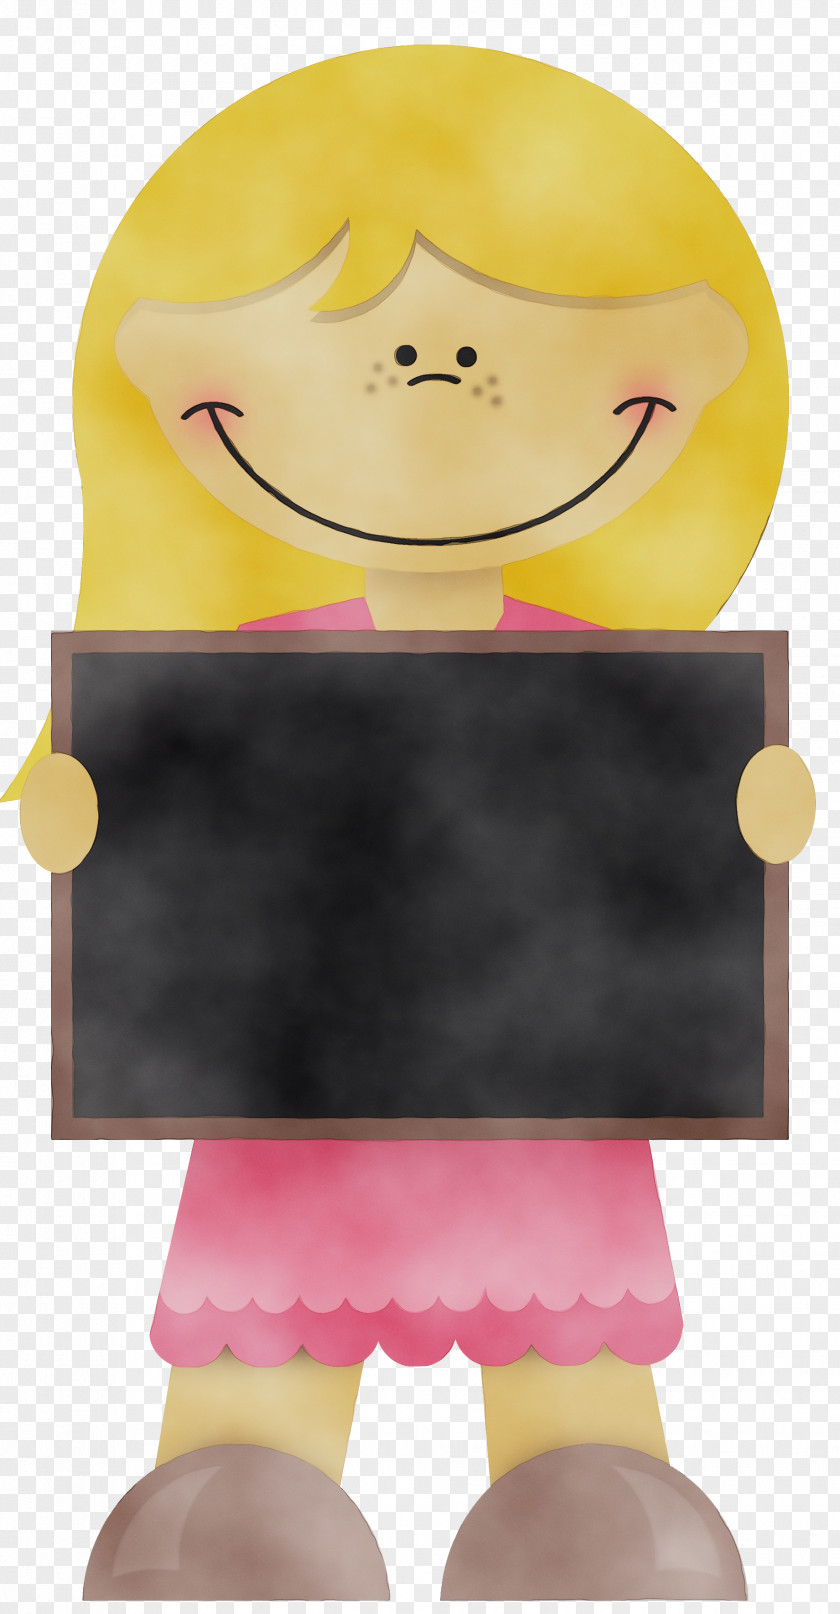 Facial Expression Cartoon Pink Yellow Smile PNG